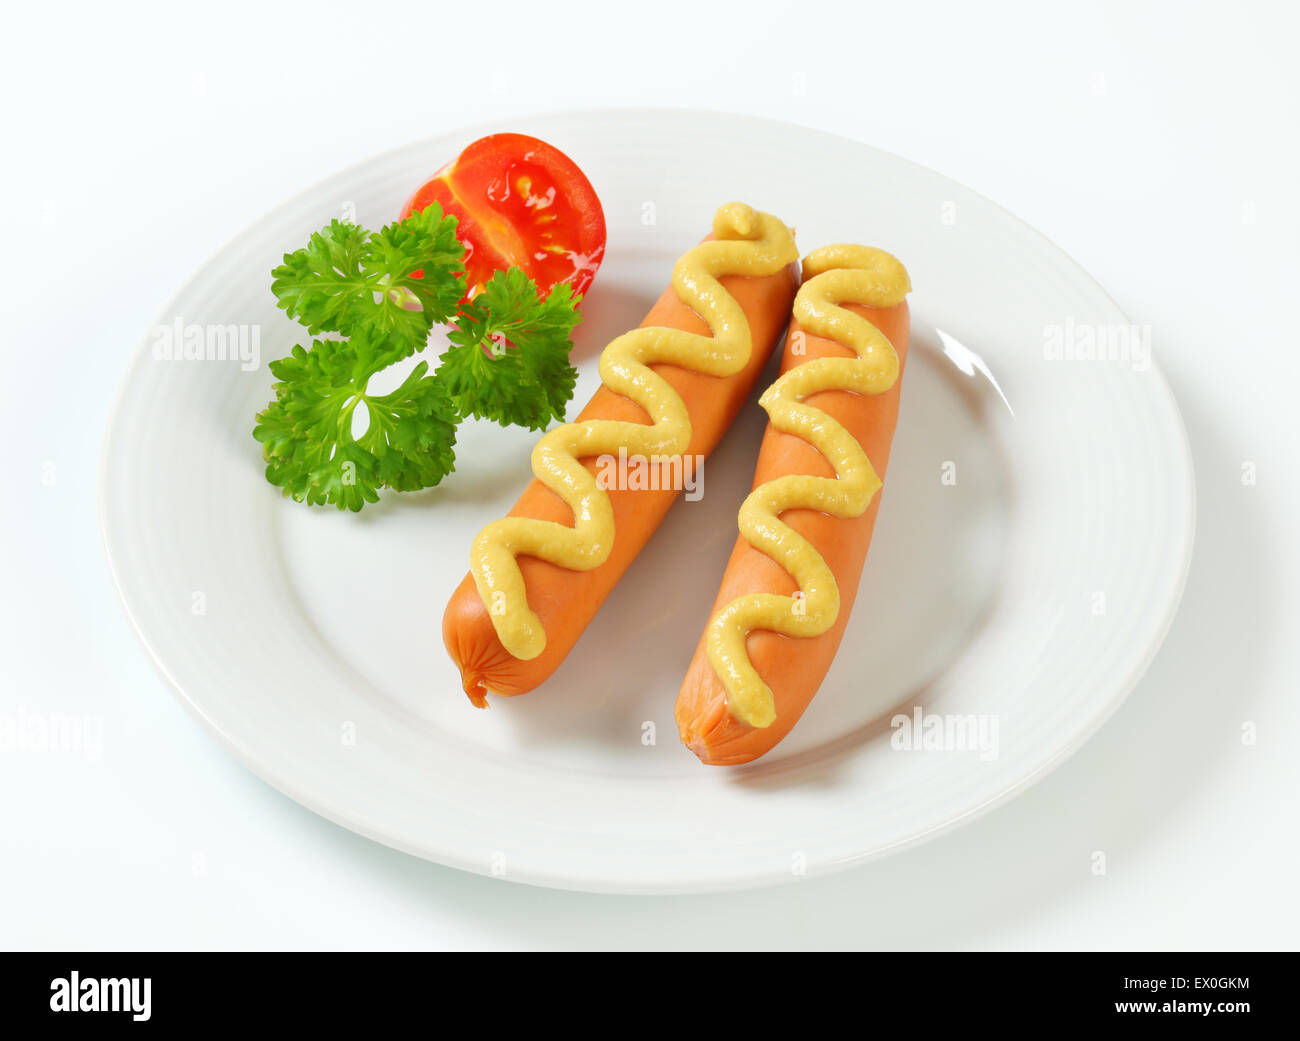 Frankfurter sausages with mustard sauce Stock Photo - Alamy